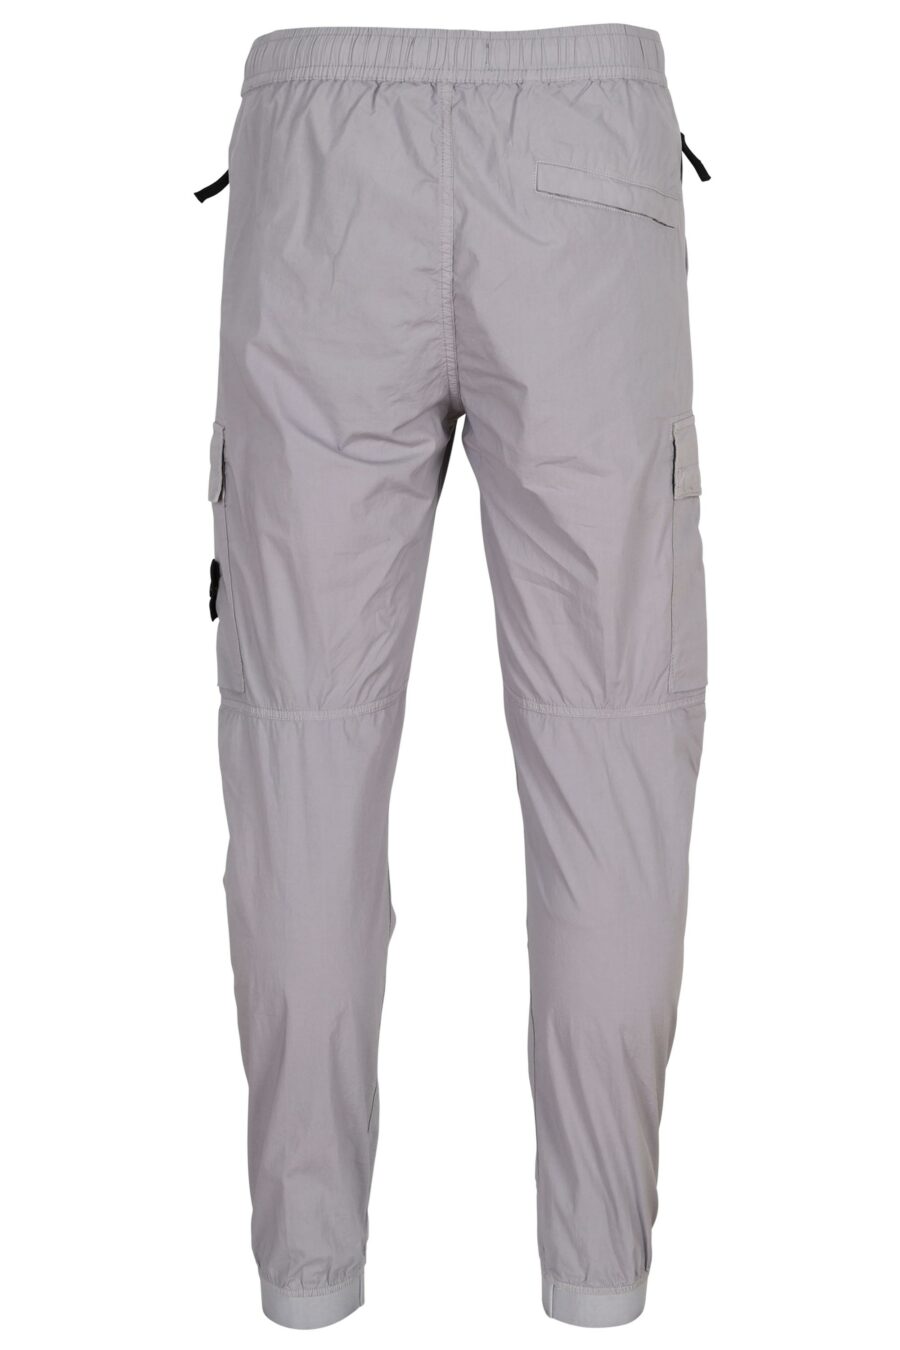 Pantalón lila grisáceo "tapered" con logo parche brújula - 8052572926846 1